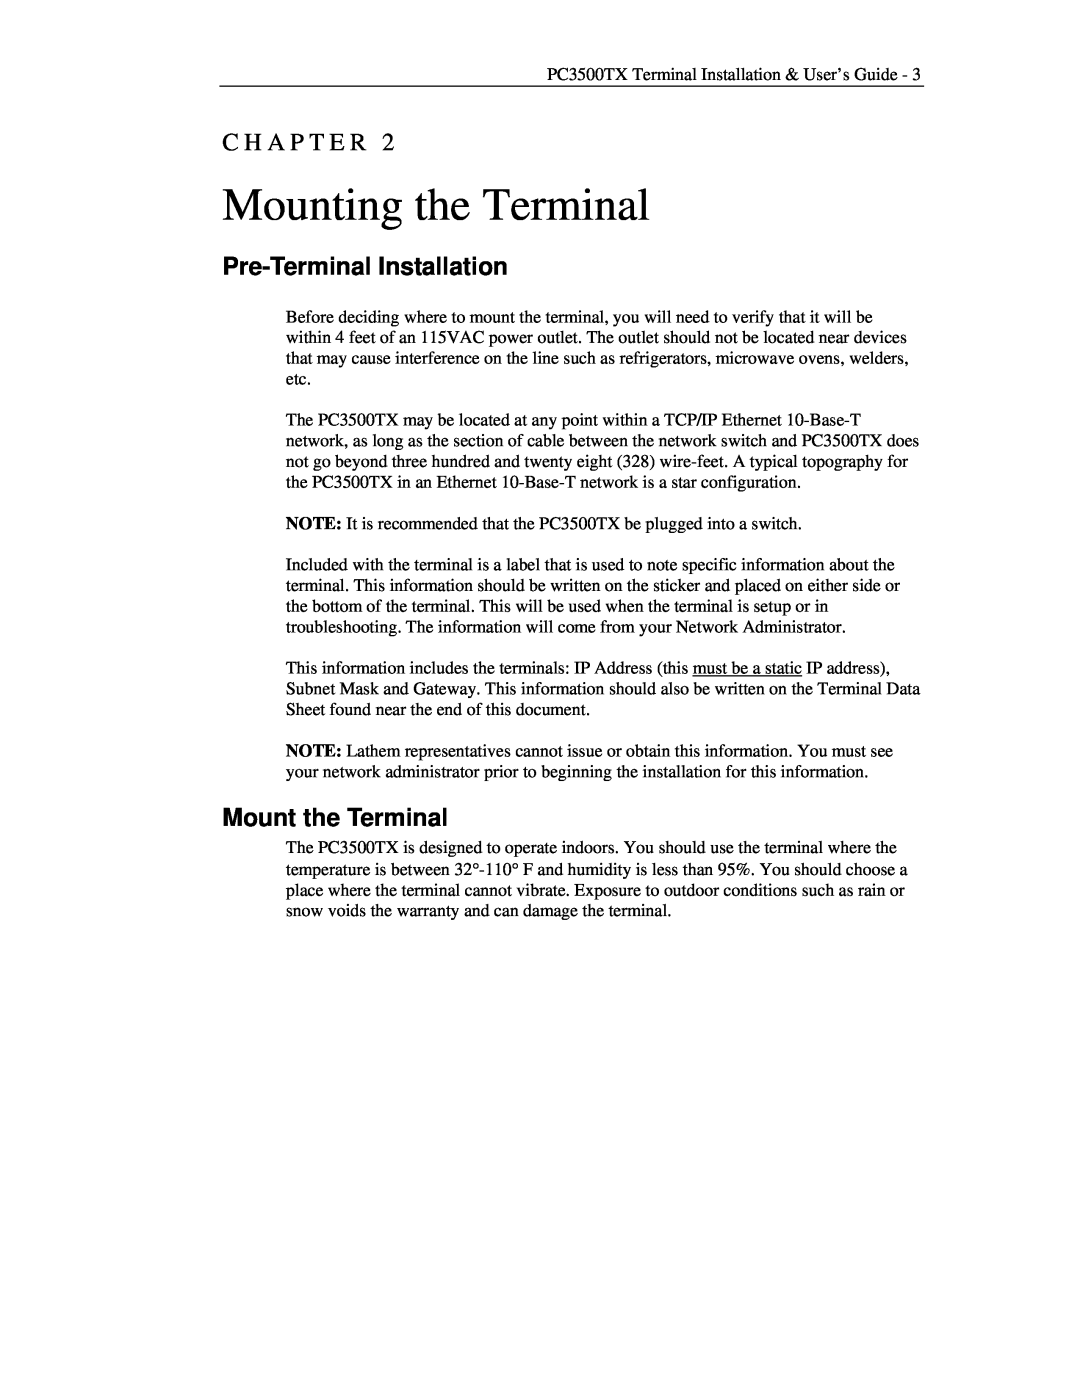 Lathem PC3500TX manual Mounting the Terminal, Pre-Terminal Installation, Mount the Terminal, C H A P T E R 